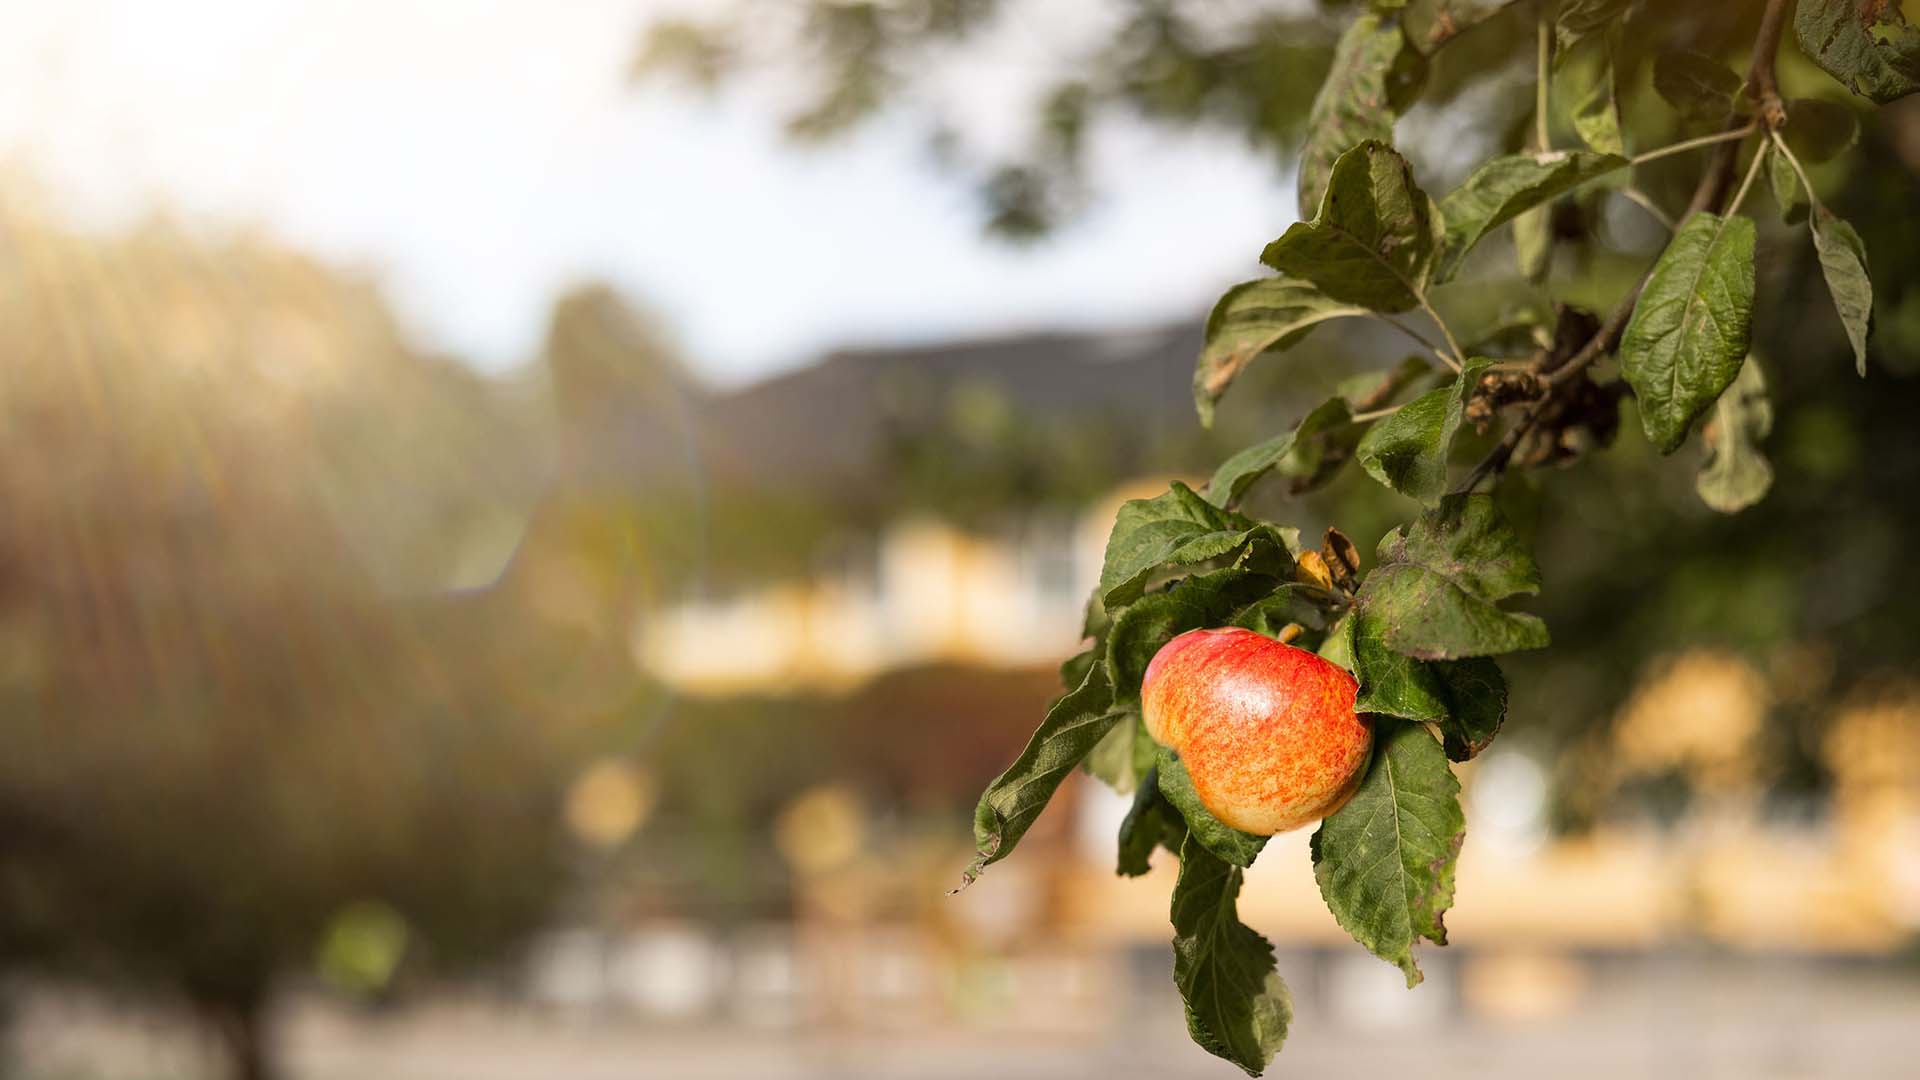 ett äpple i ett träd i närheten av ednahemmet